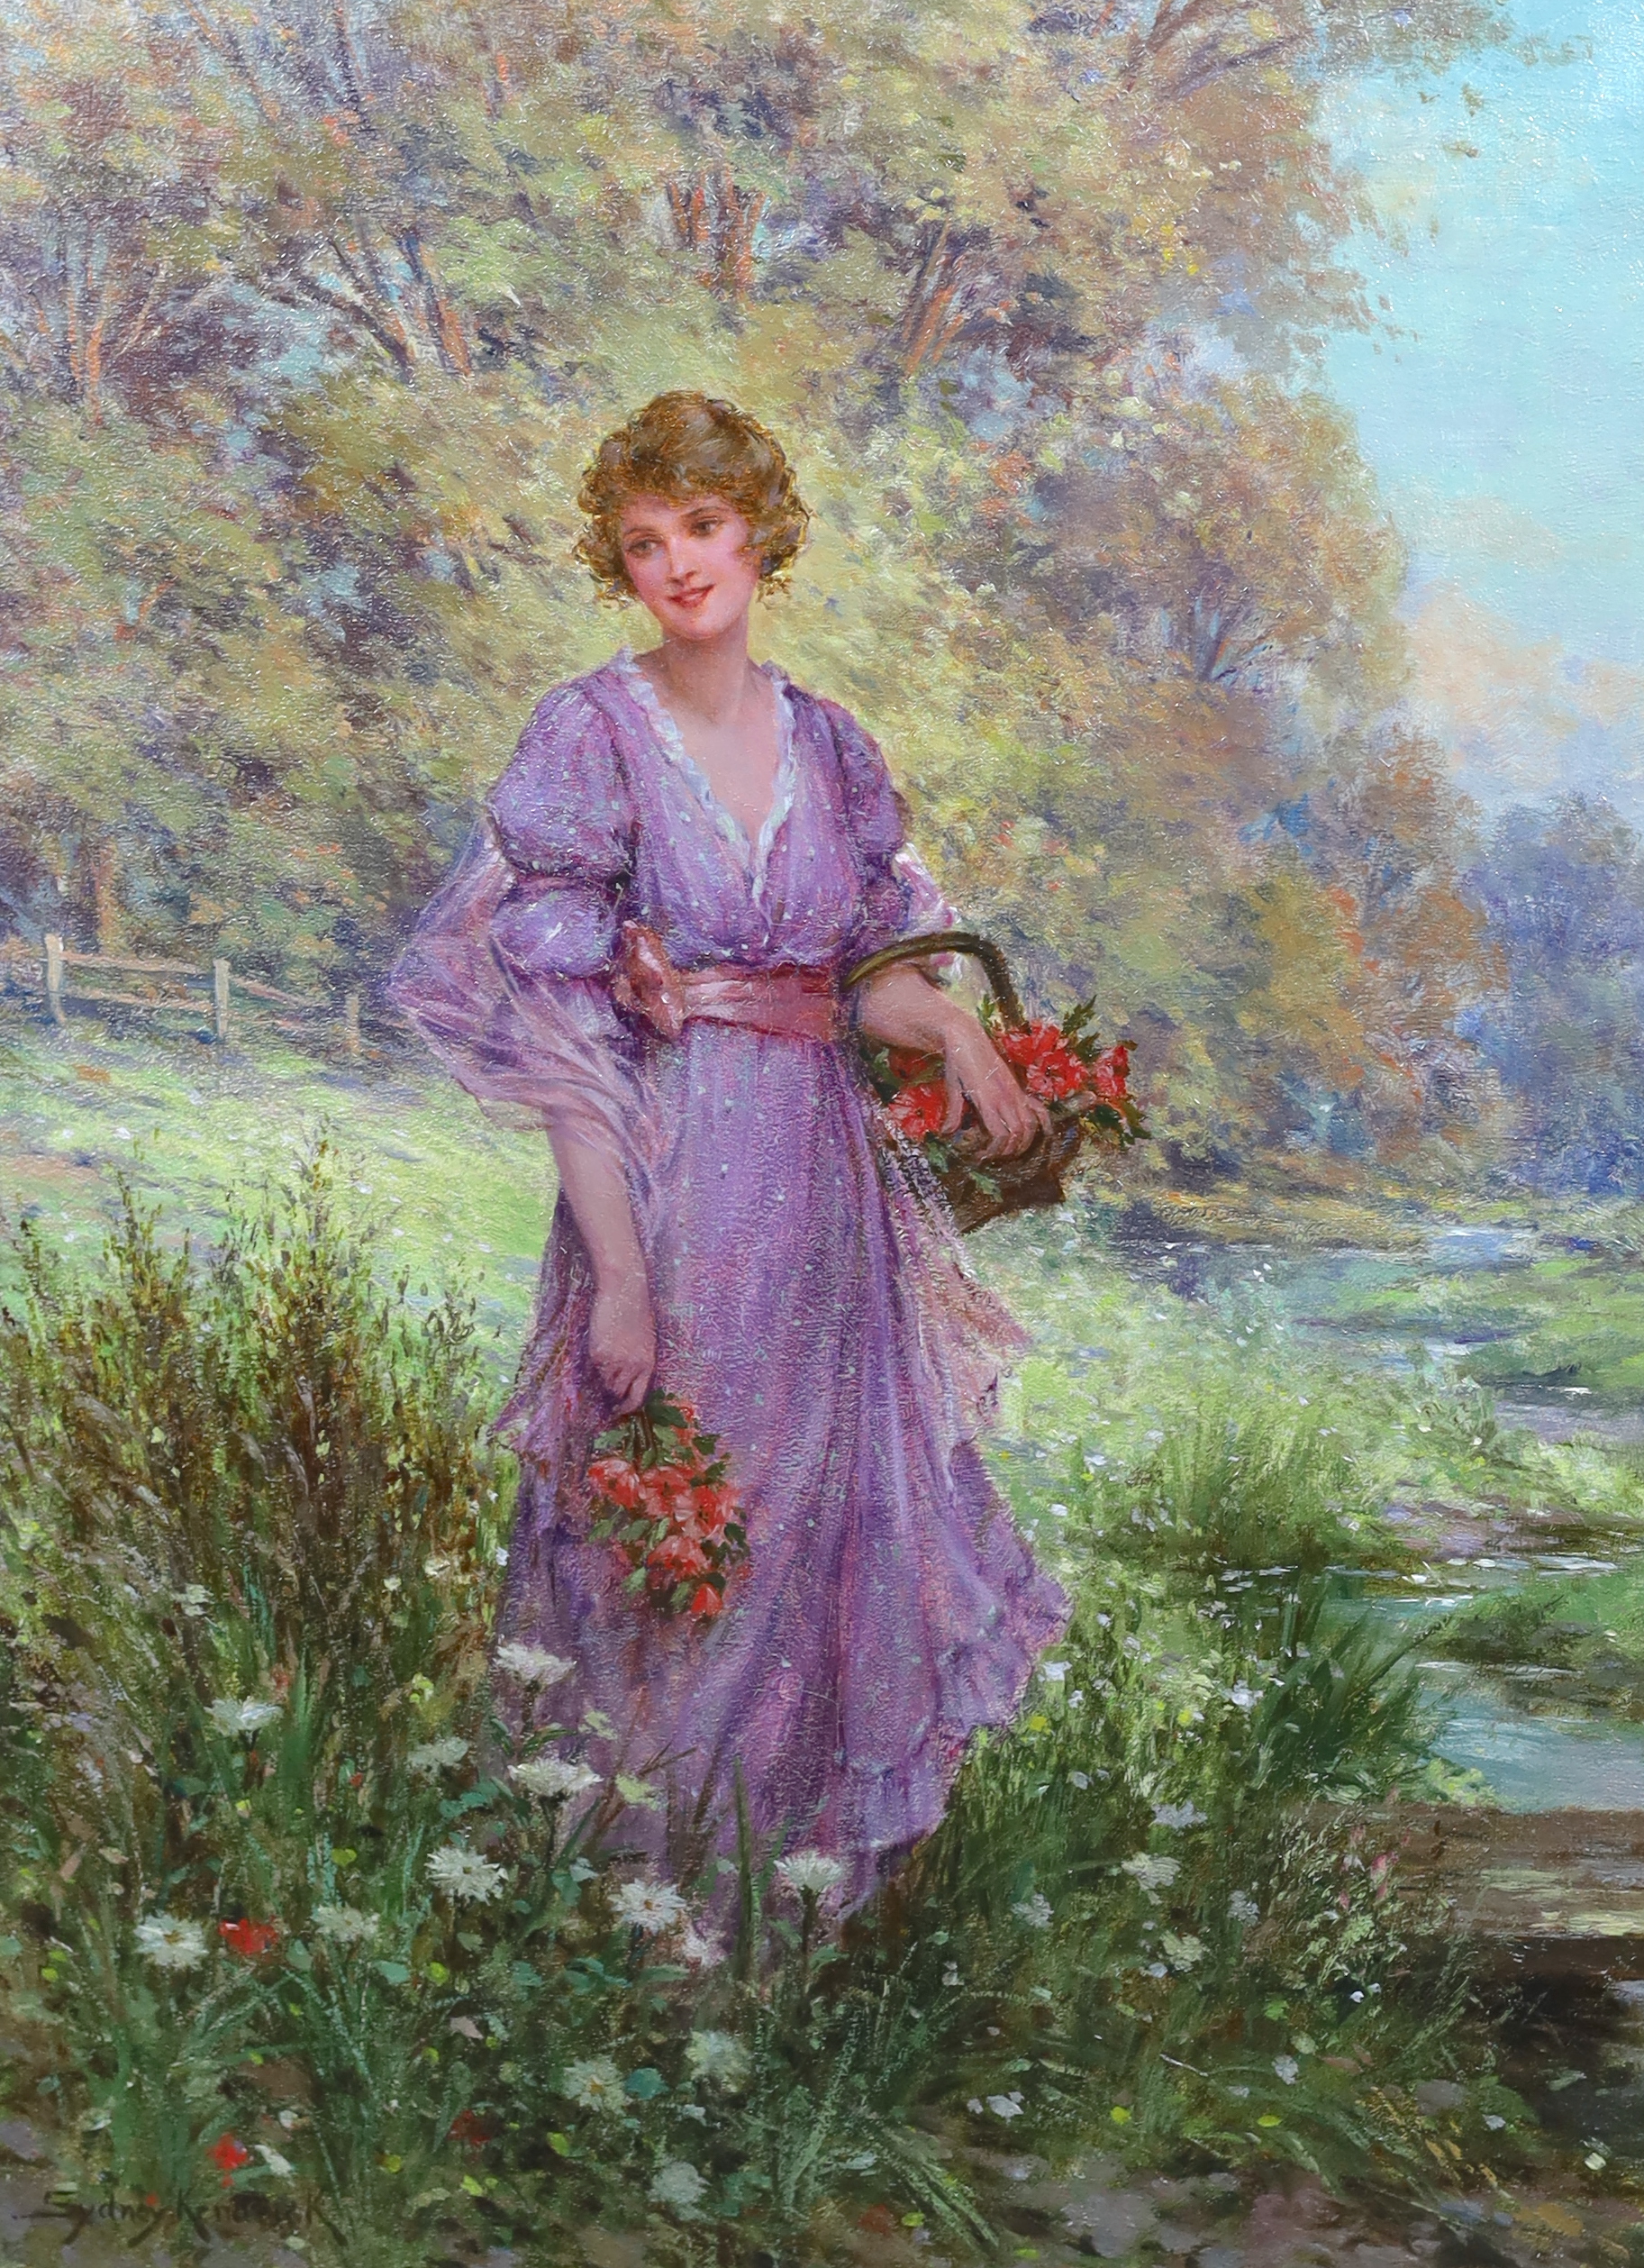 Sydney Percy Kendrick (1874-1955), 'Gathering Harebells', oil on canvas, 60 x 45cm